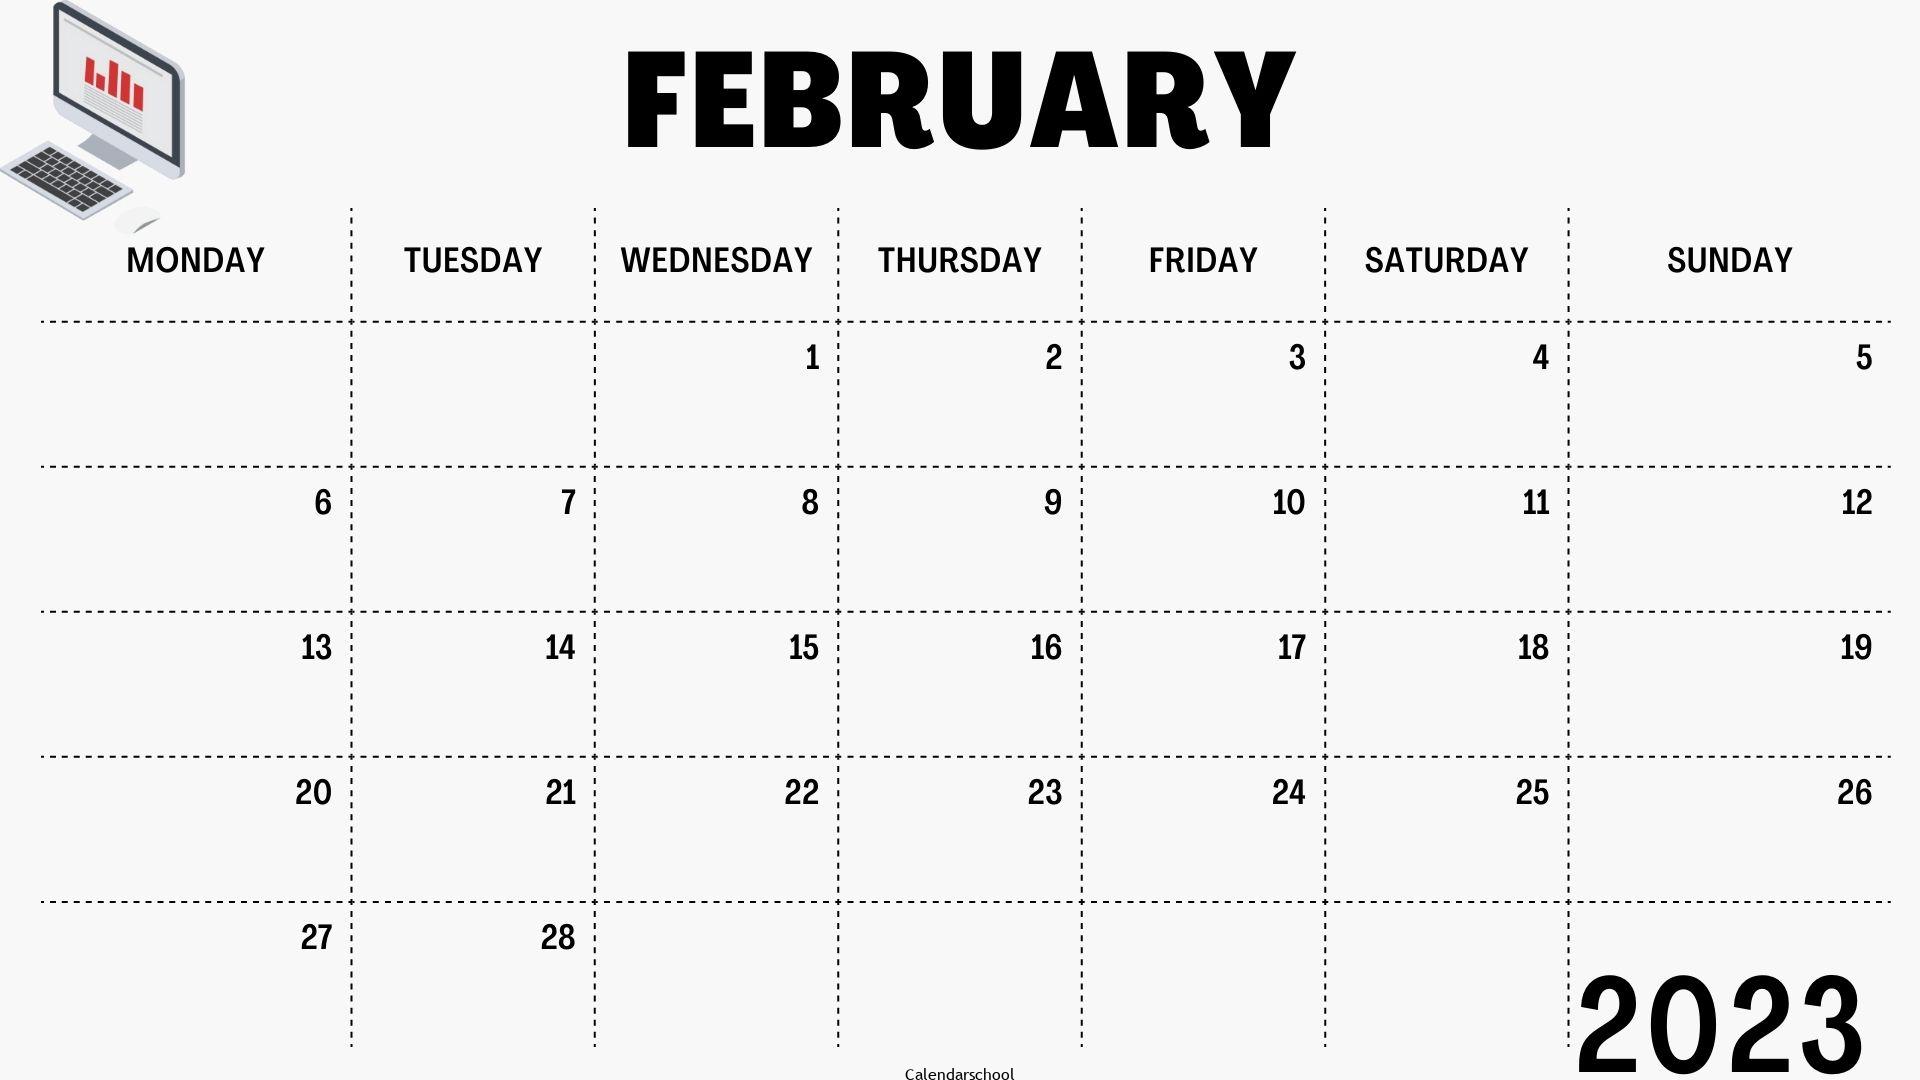 February Calendar 2023 Wiki